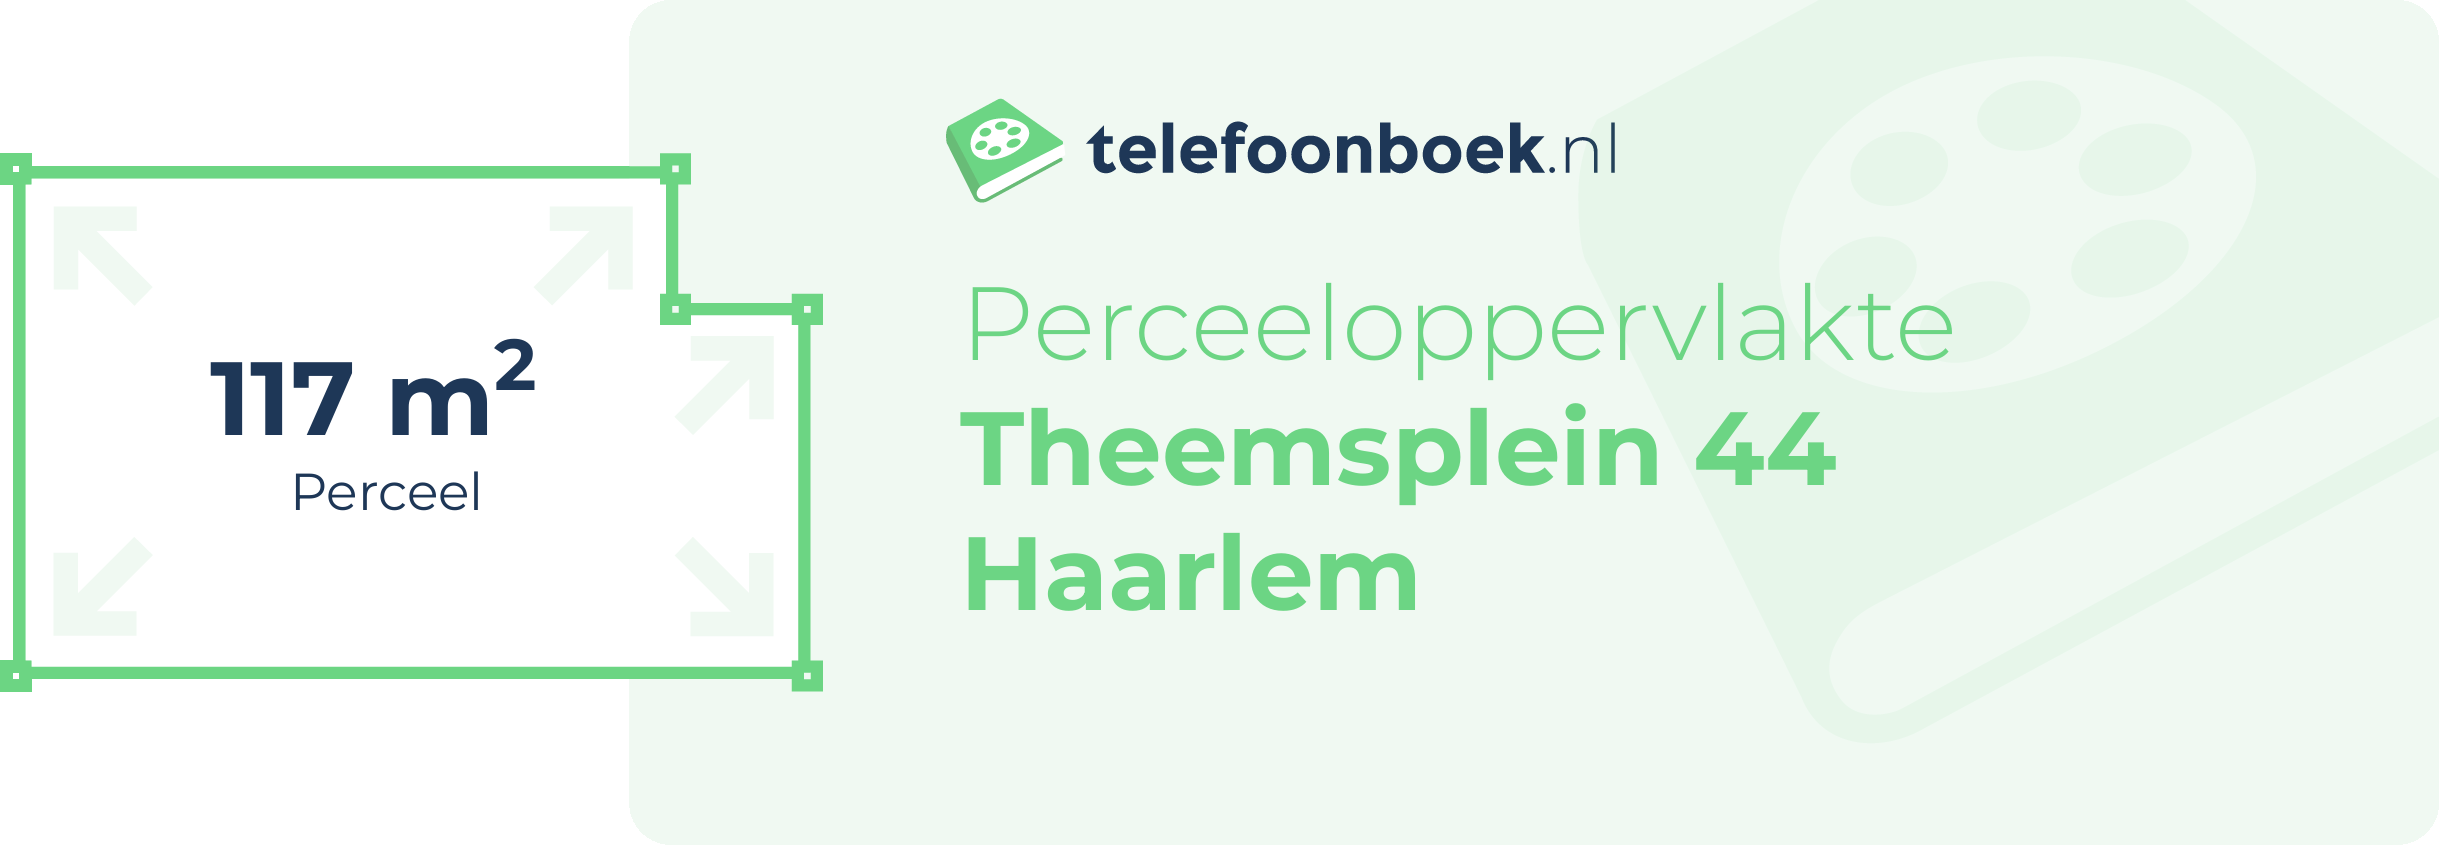 Perceeloppervlakte Theemsplein 44 Haarlem